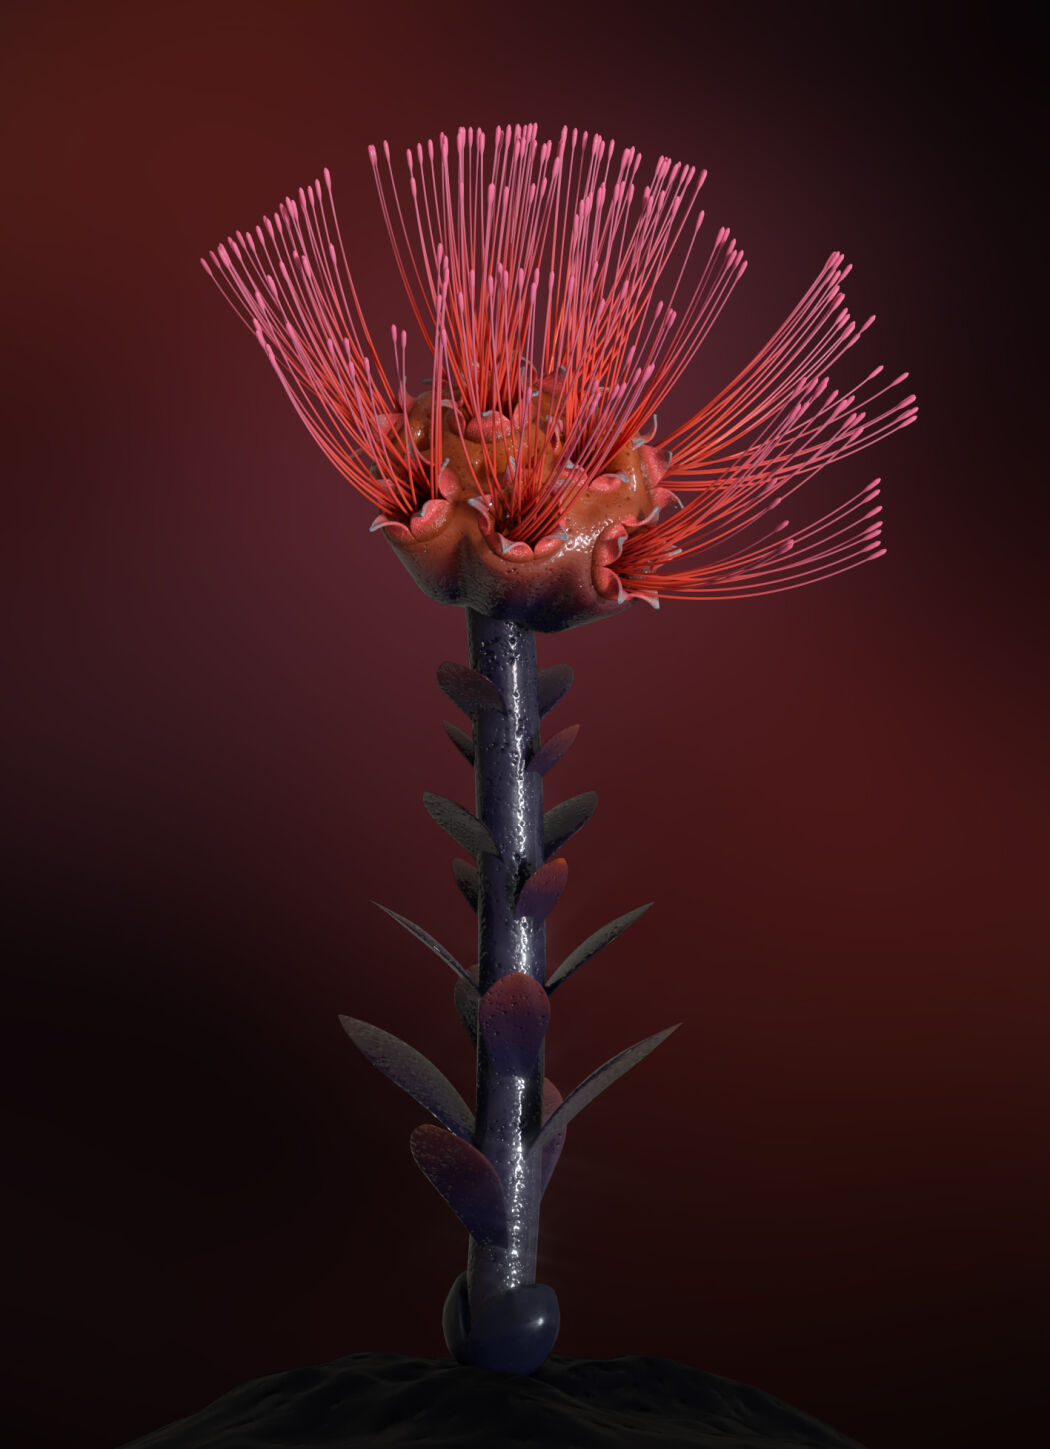 3D florals by Double Up Studio